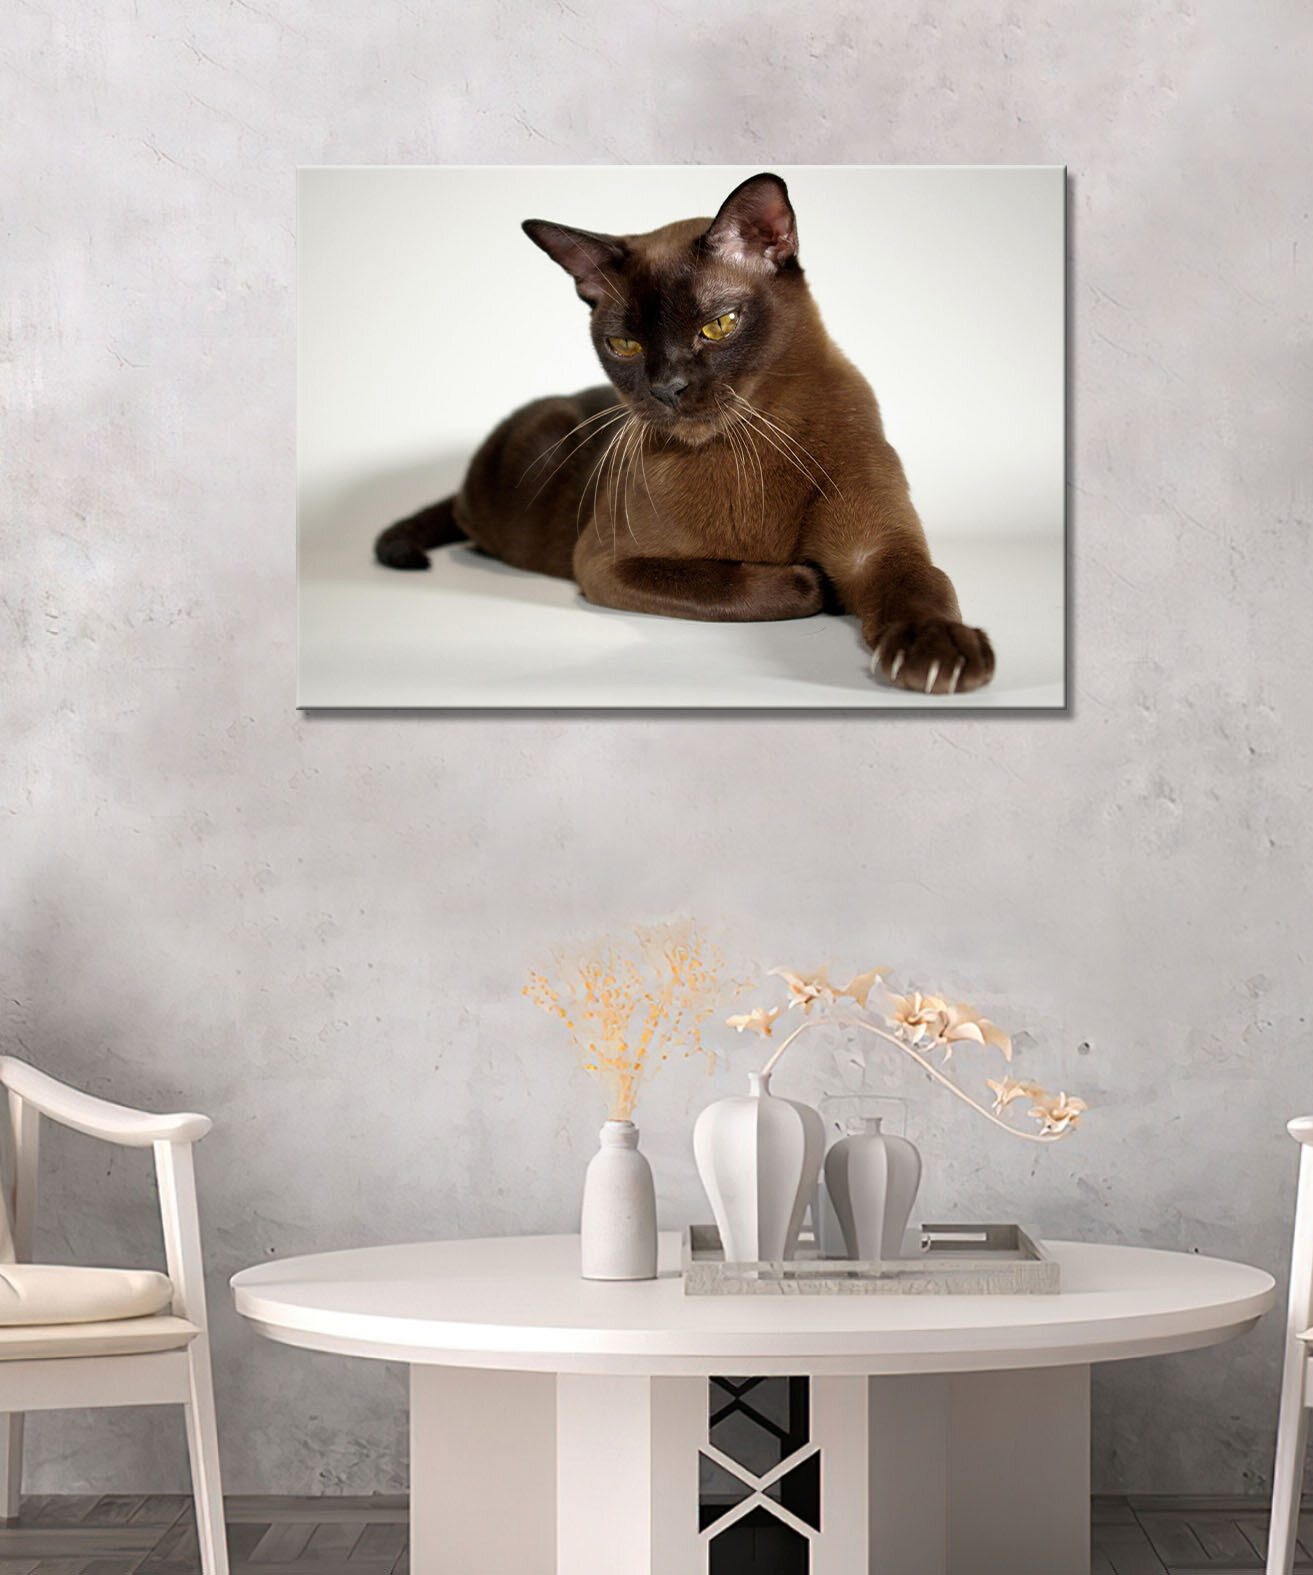 Картина - кошка, бурманская кошка, кот, тёмная кошка, ласковая кошка (45) 20х30